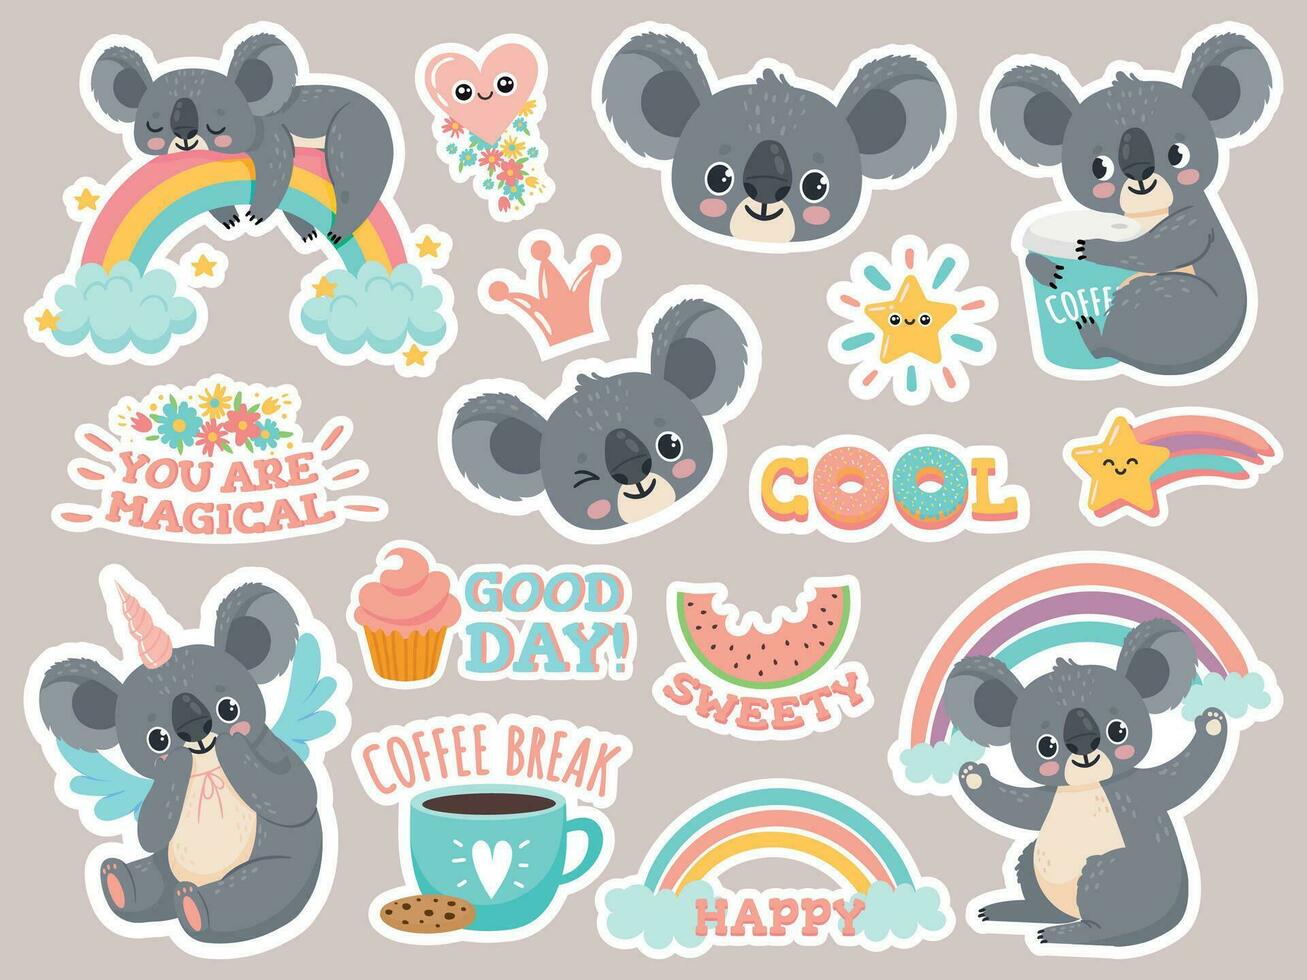 Magic koala stickers. Lazy australian koalas sleeping on rainbow. Patches with cute baby animal unicorns. Happy fairytale cartoon vector set